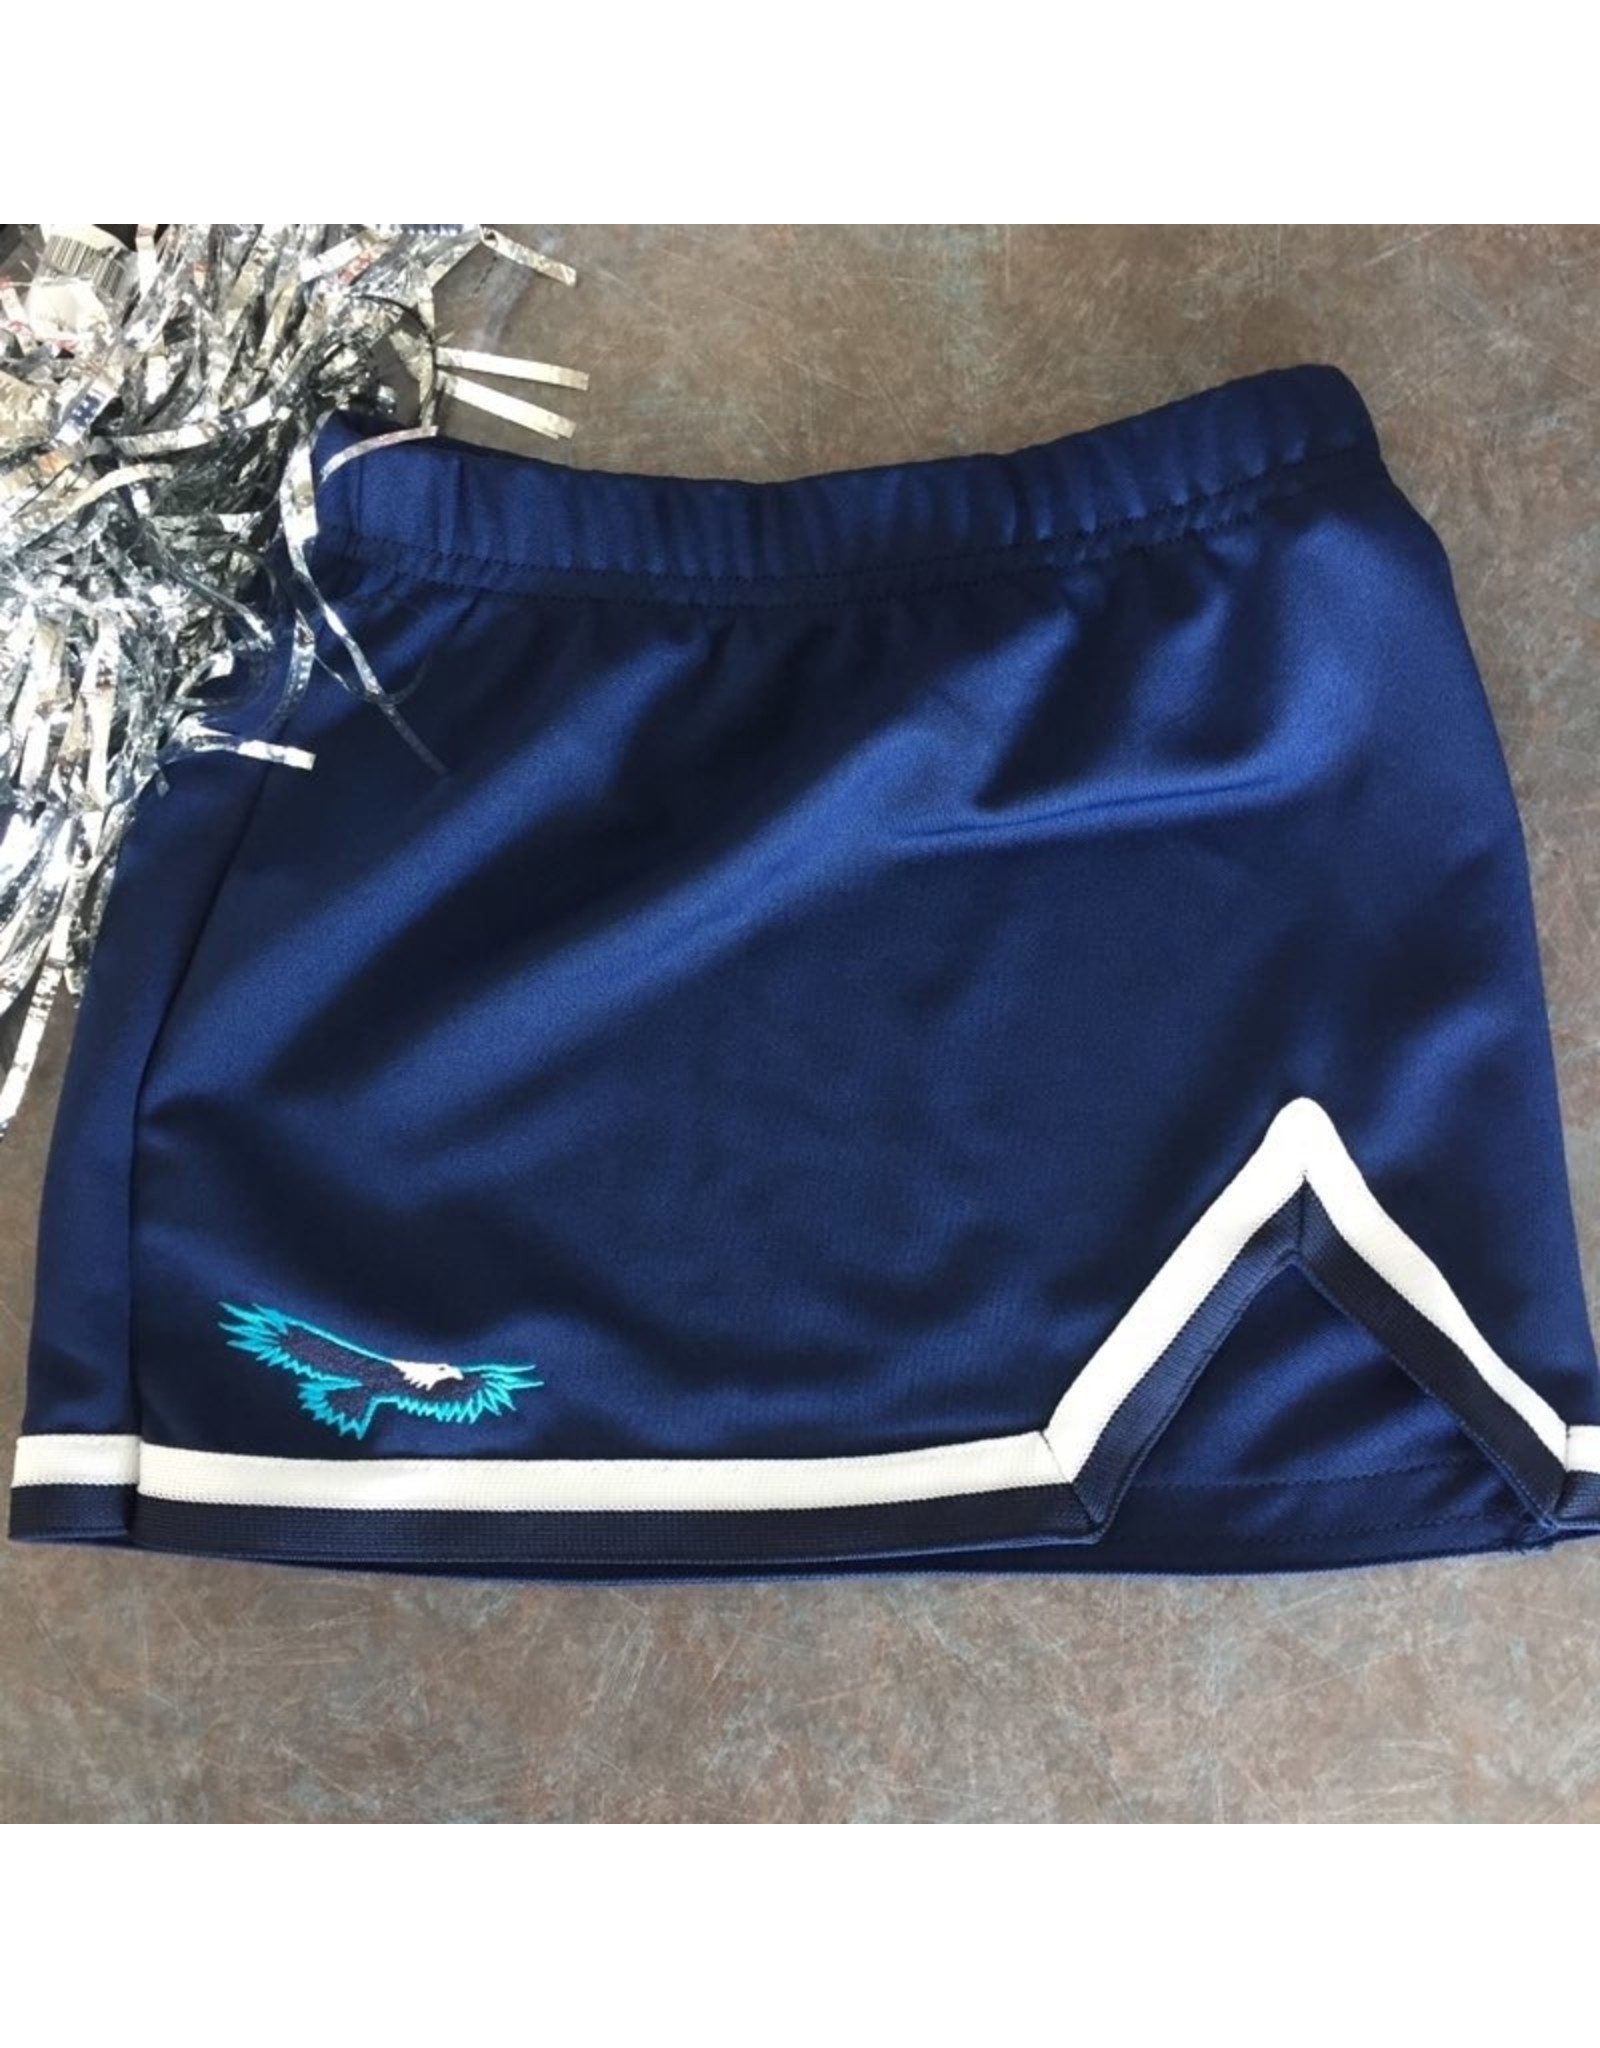 NON-UNIFORM JD Mini Cheerleader Energy Skirt